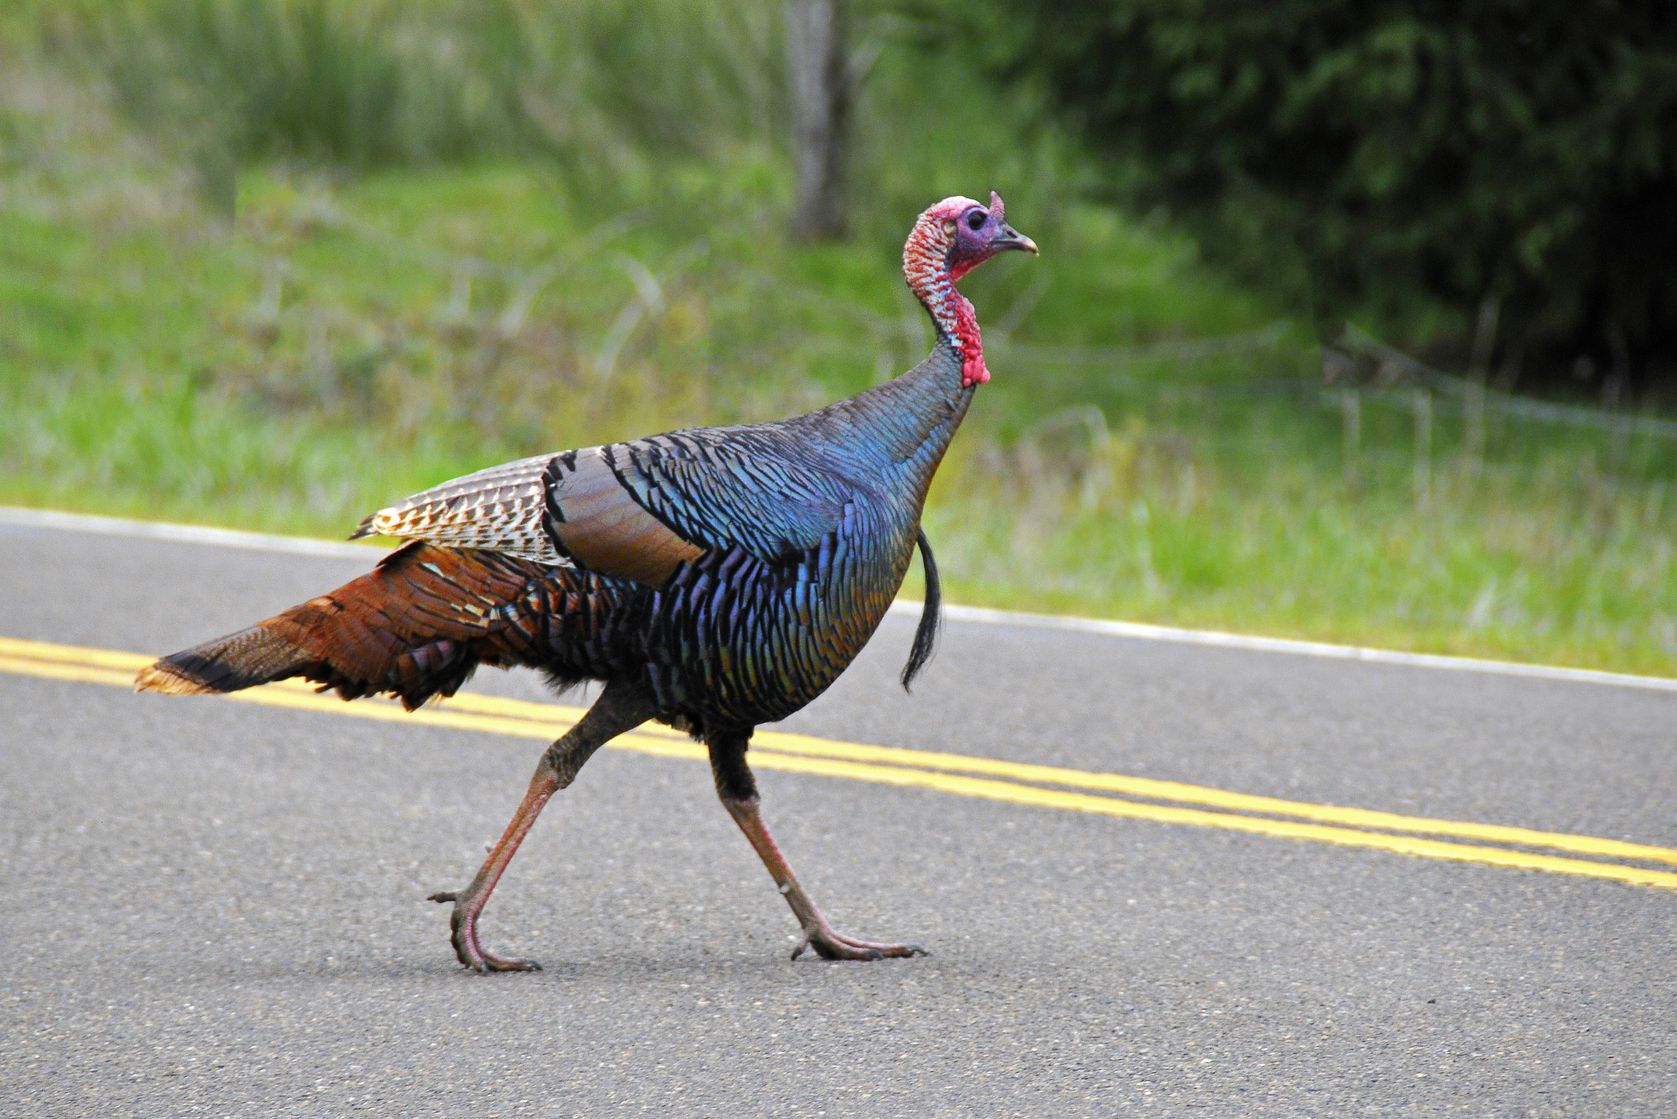 16727213 - one turkey crossing a street to reach a meadow